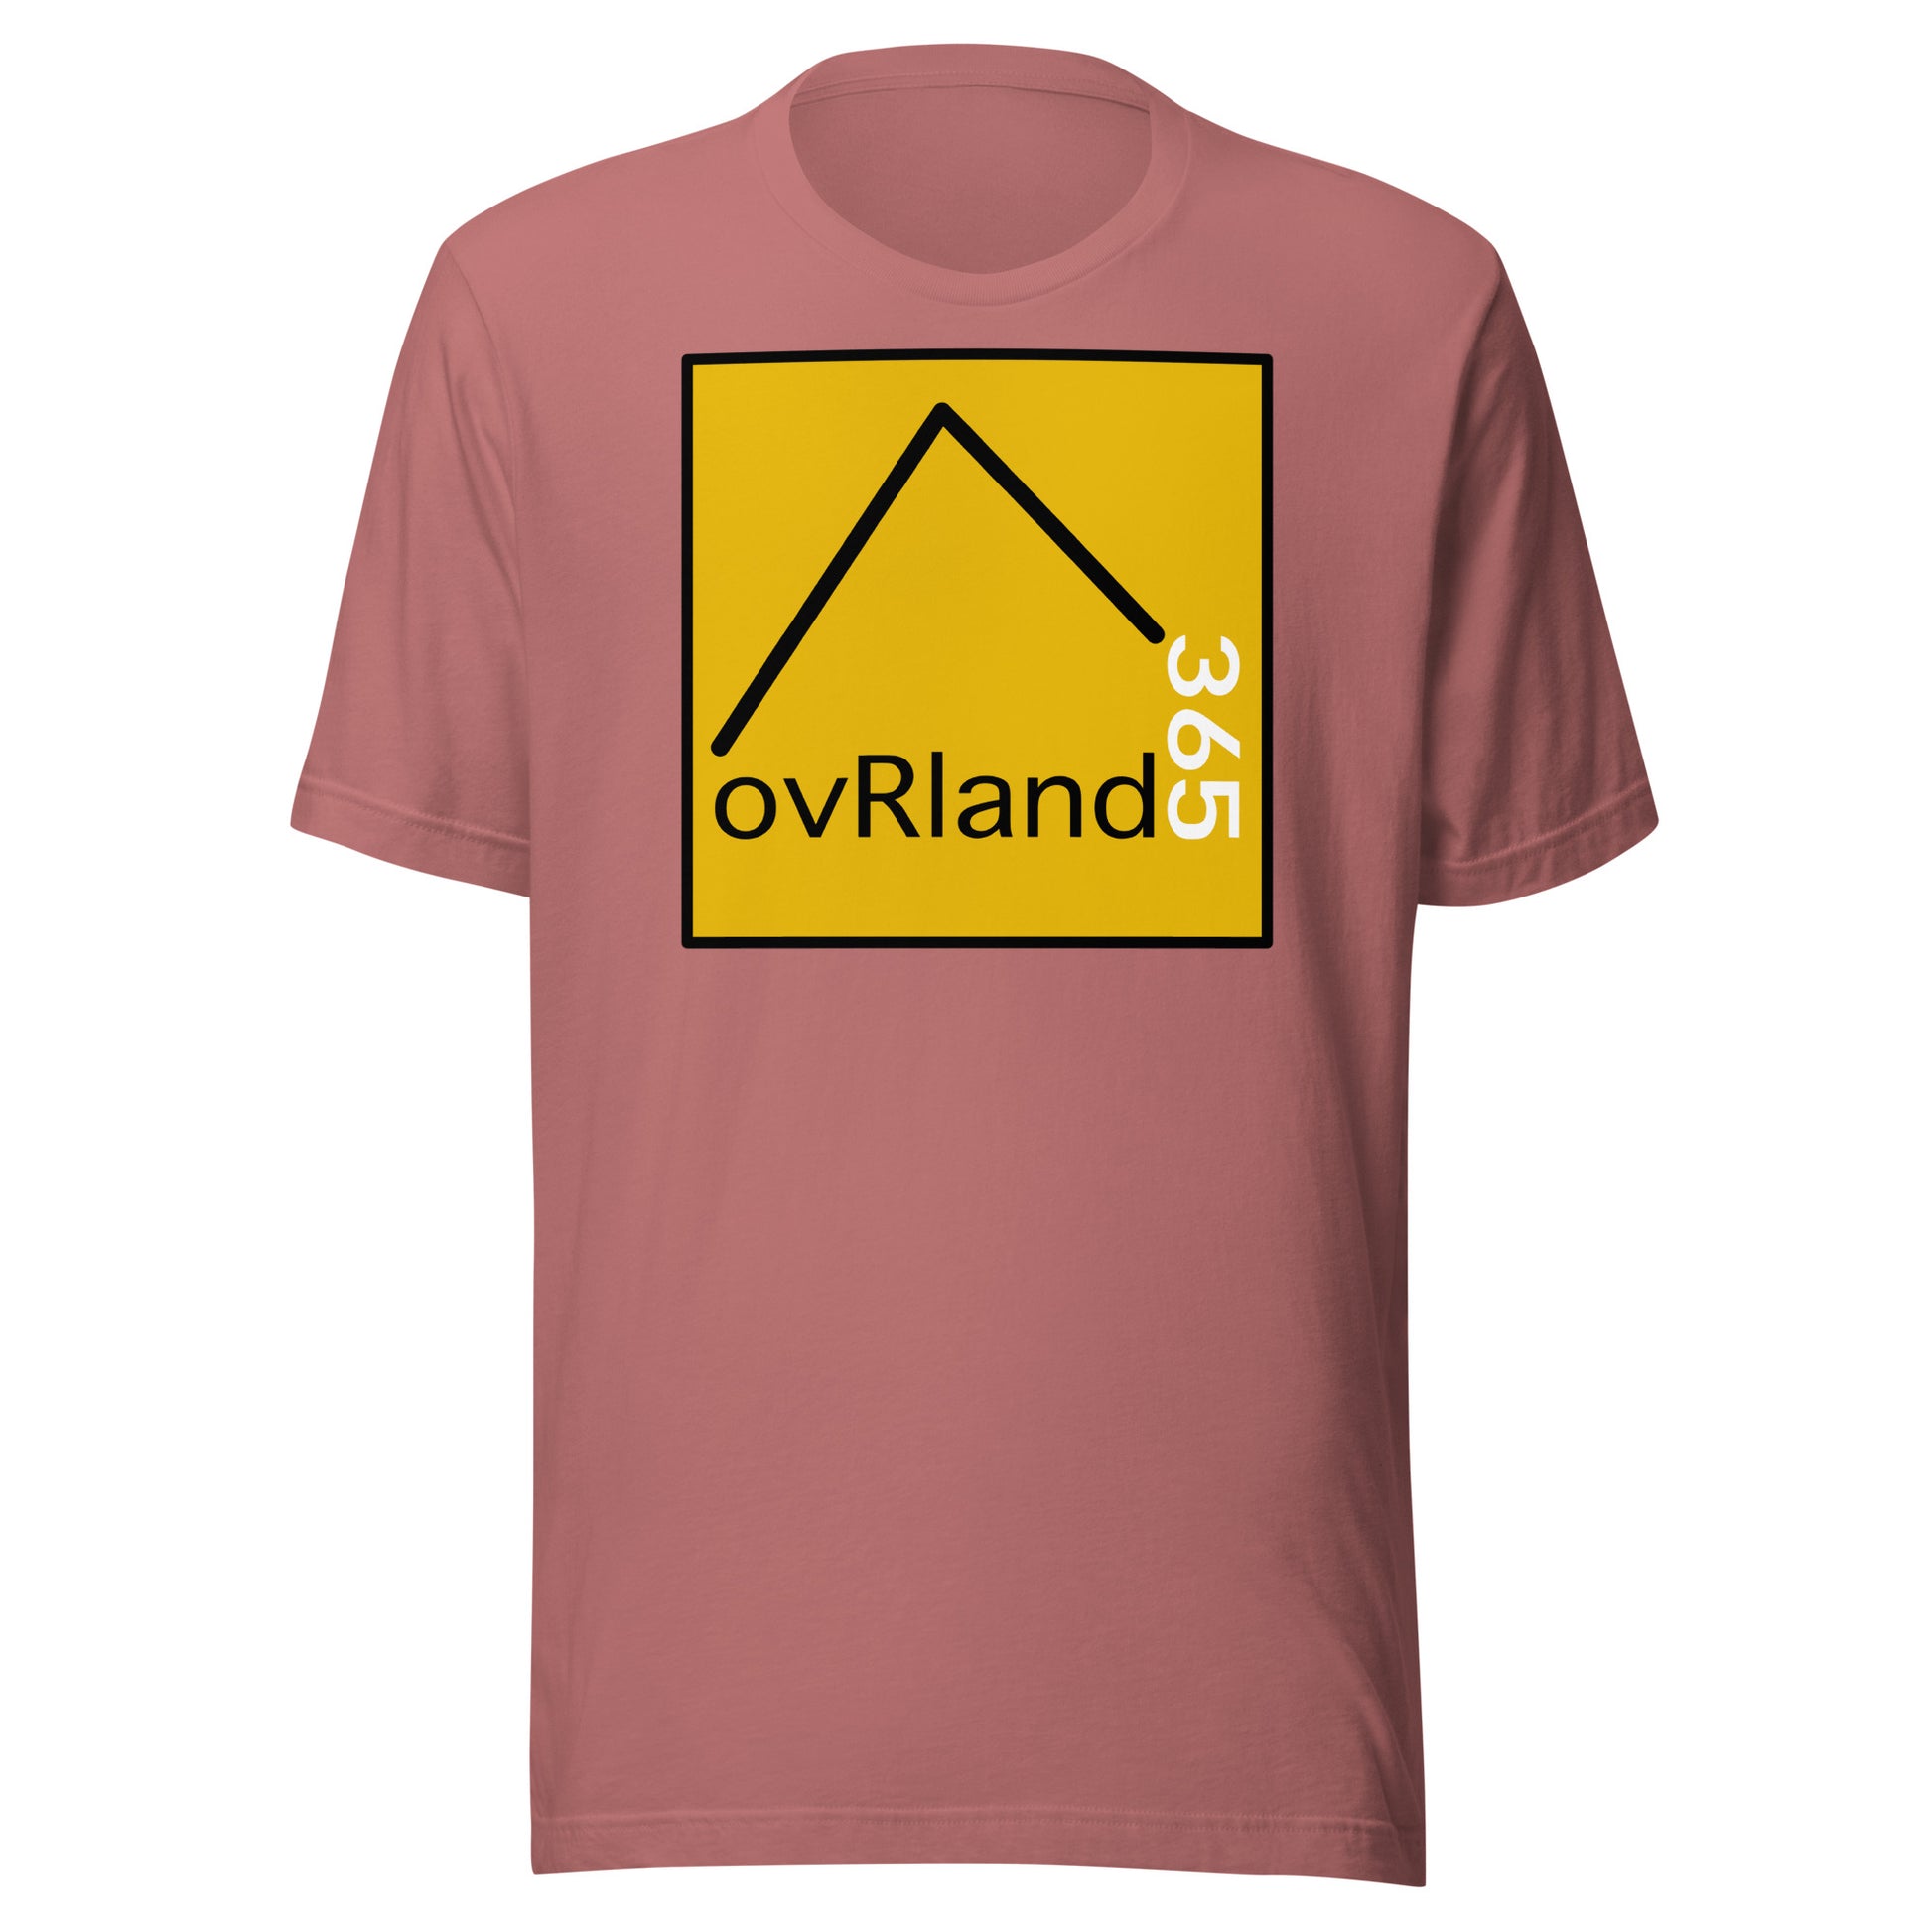 Classic ovRland365 t-shirt, pink. overland365.com